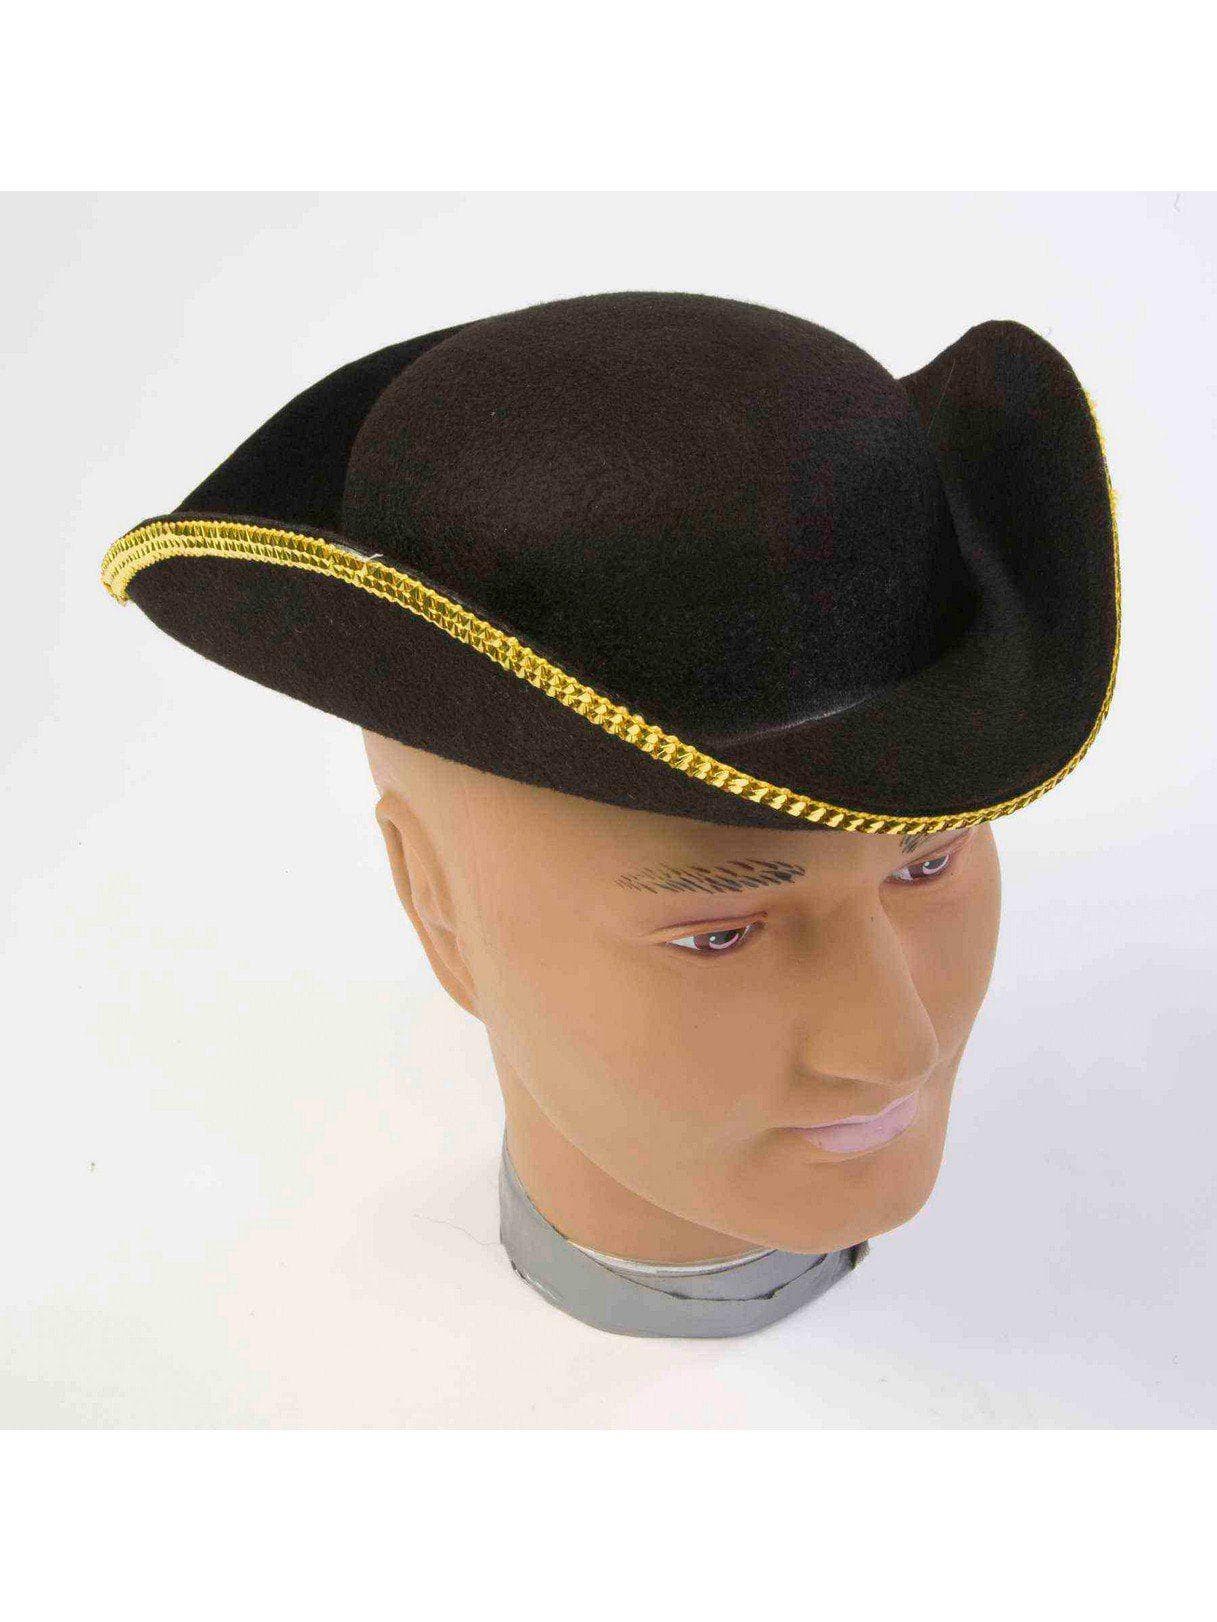 Kids' Black Tricorn Hat with Gold Trim - costumes.com